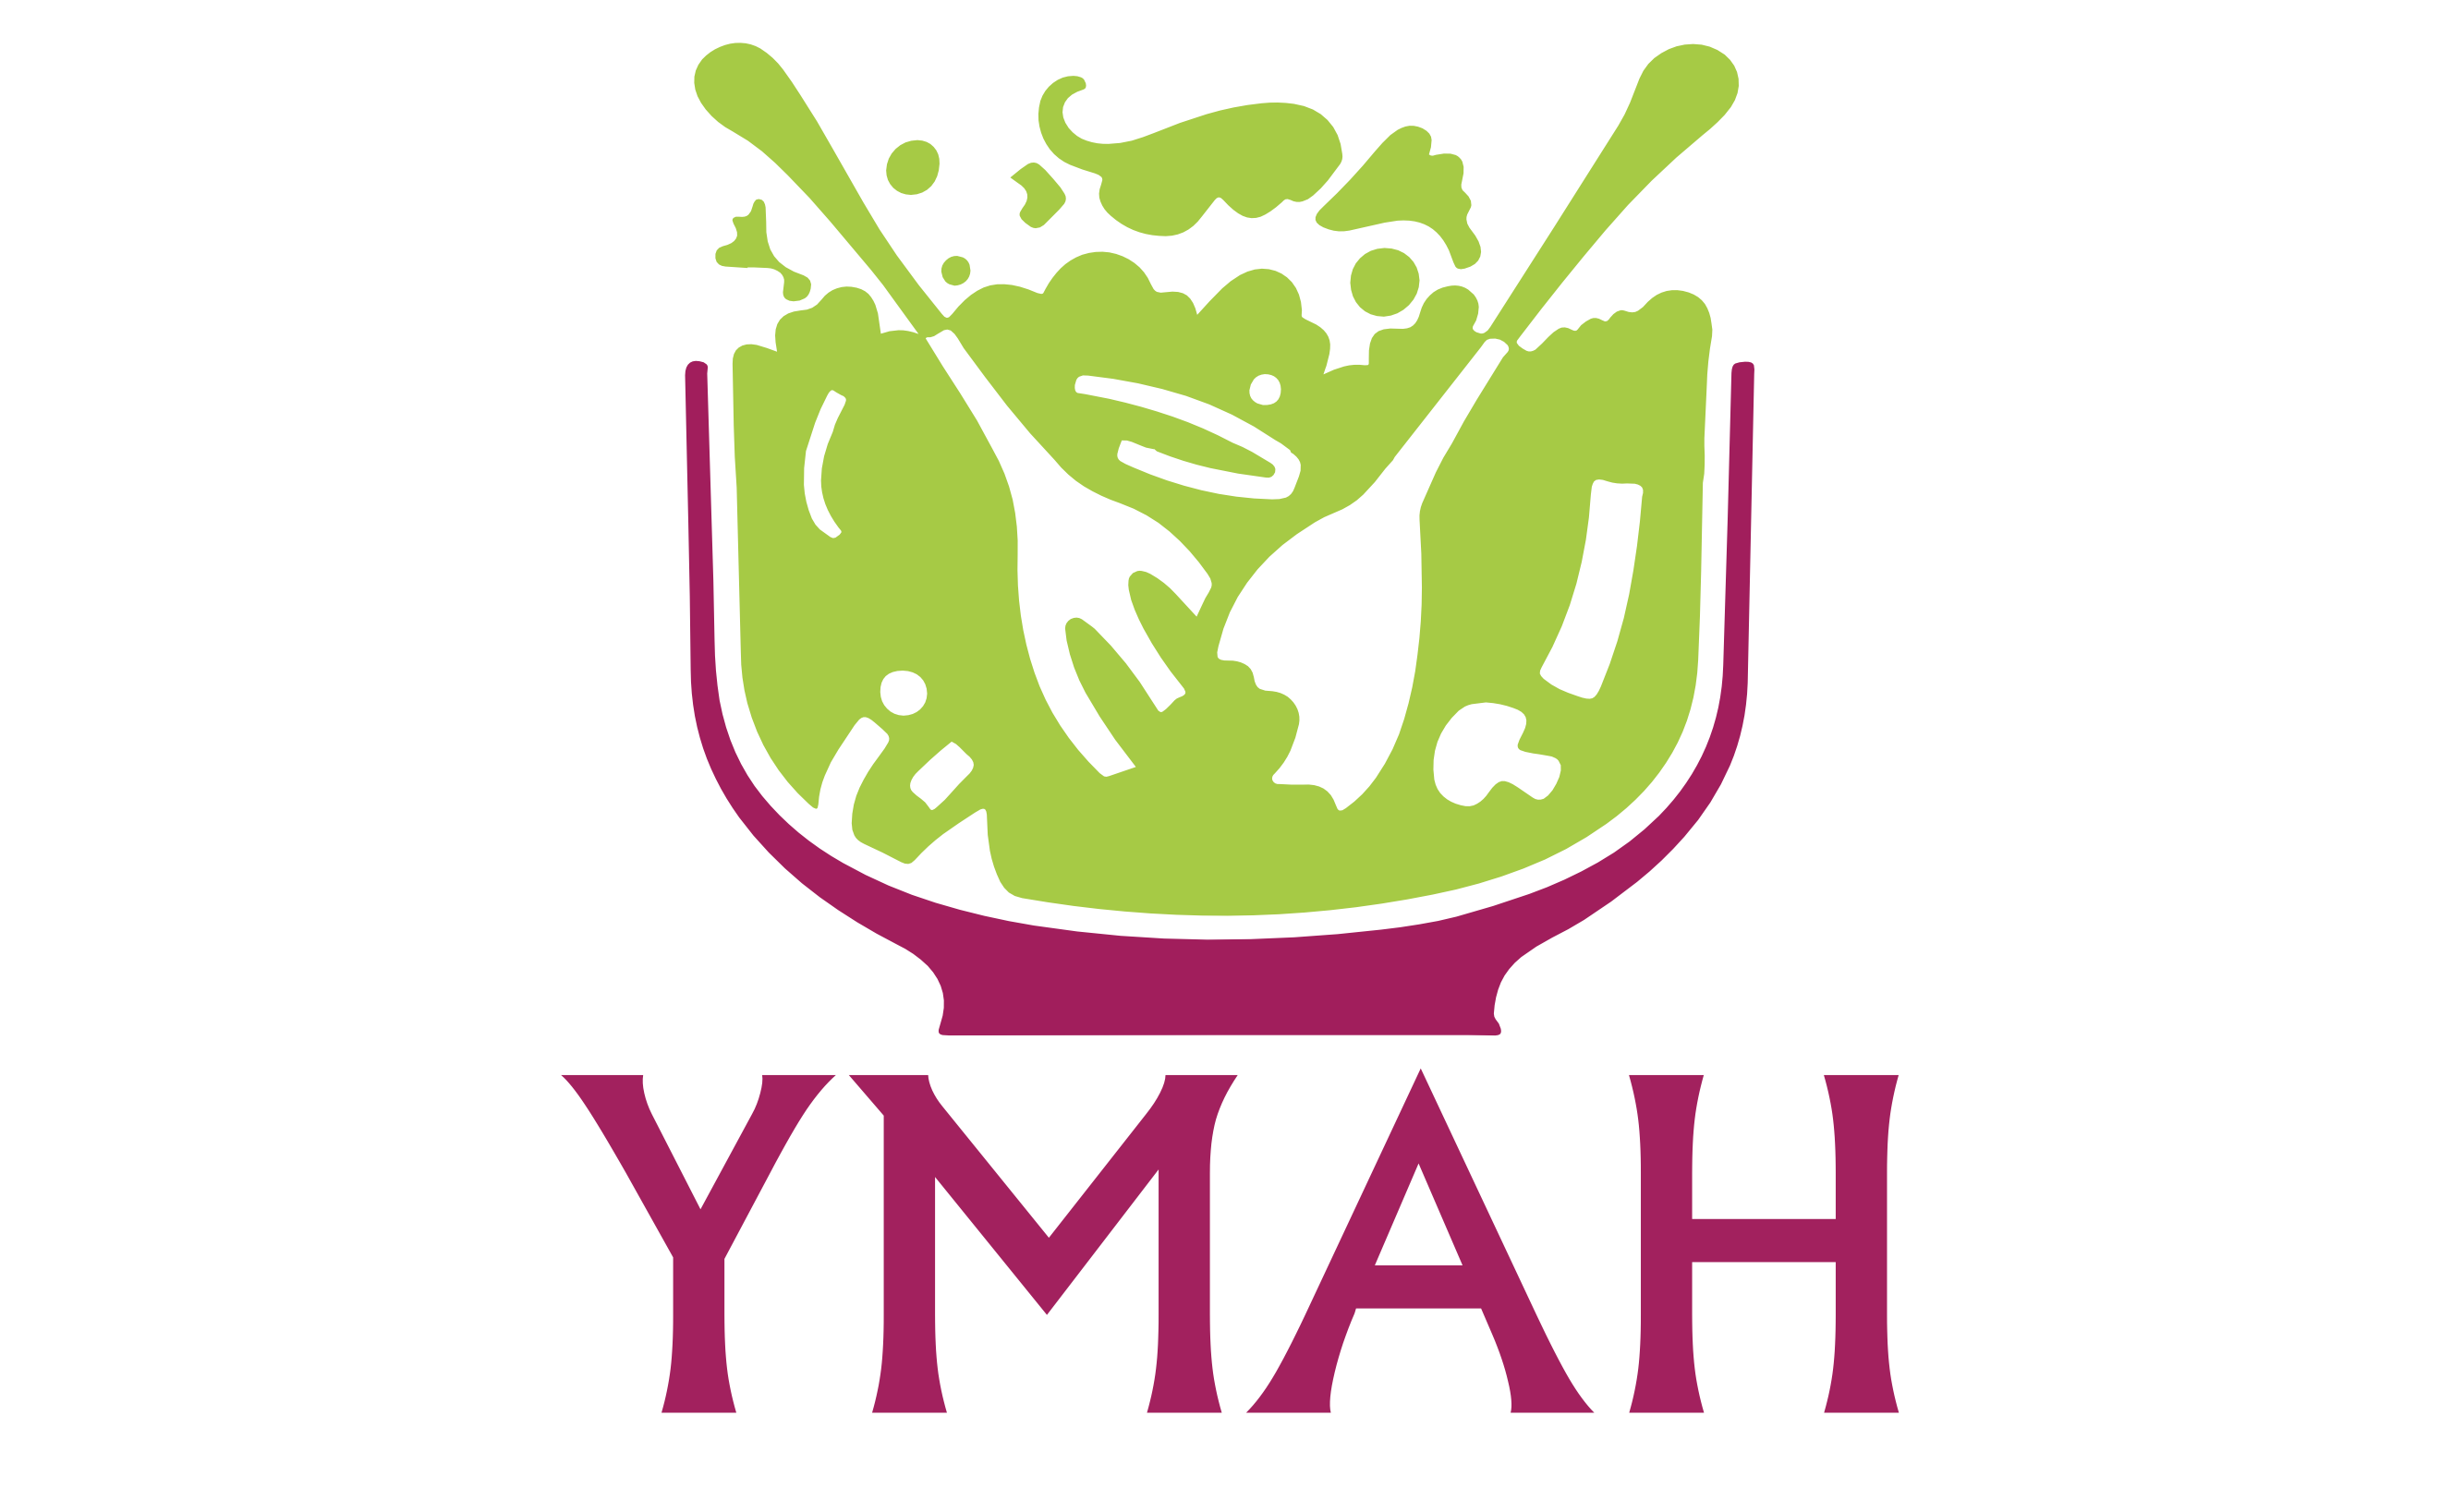 YMAH